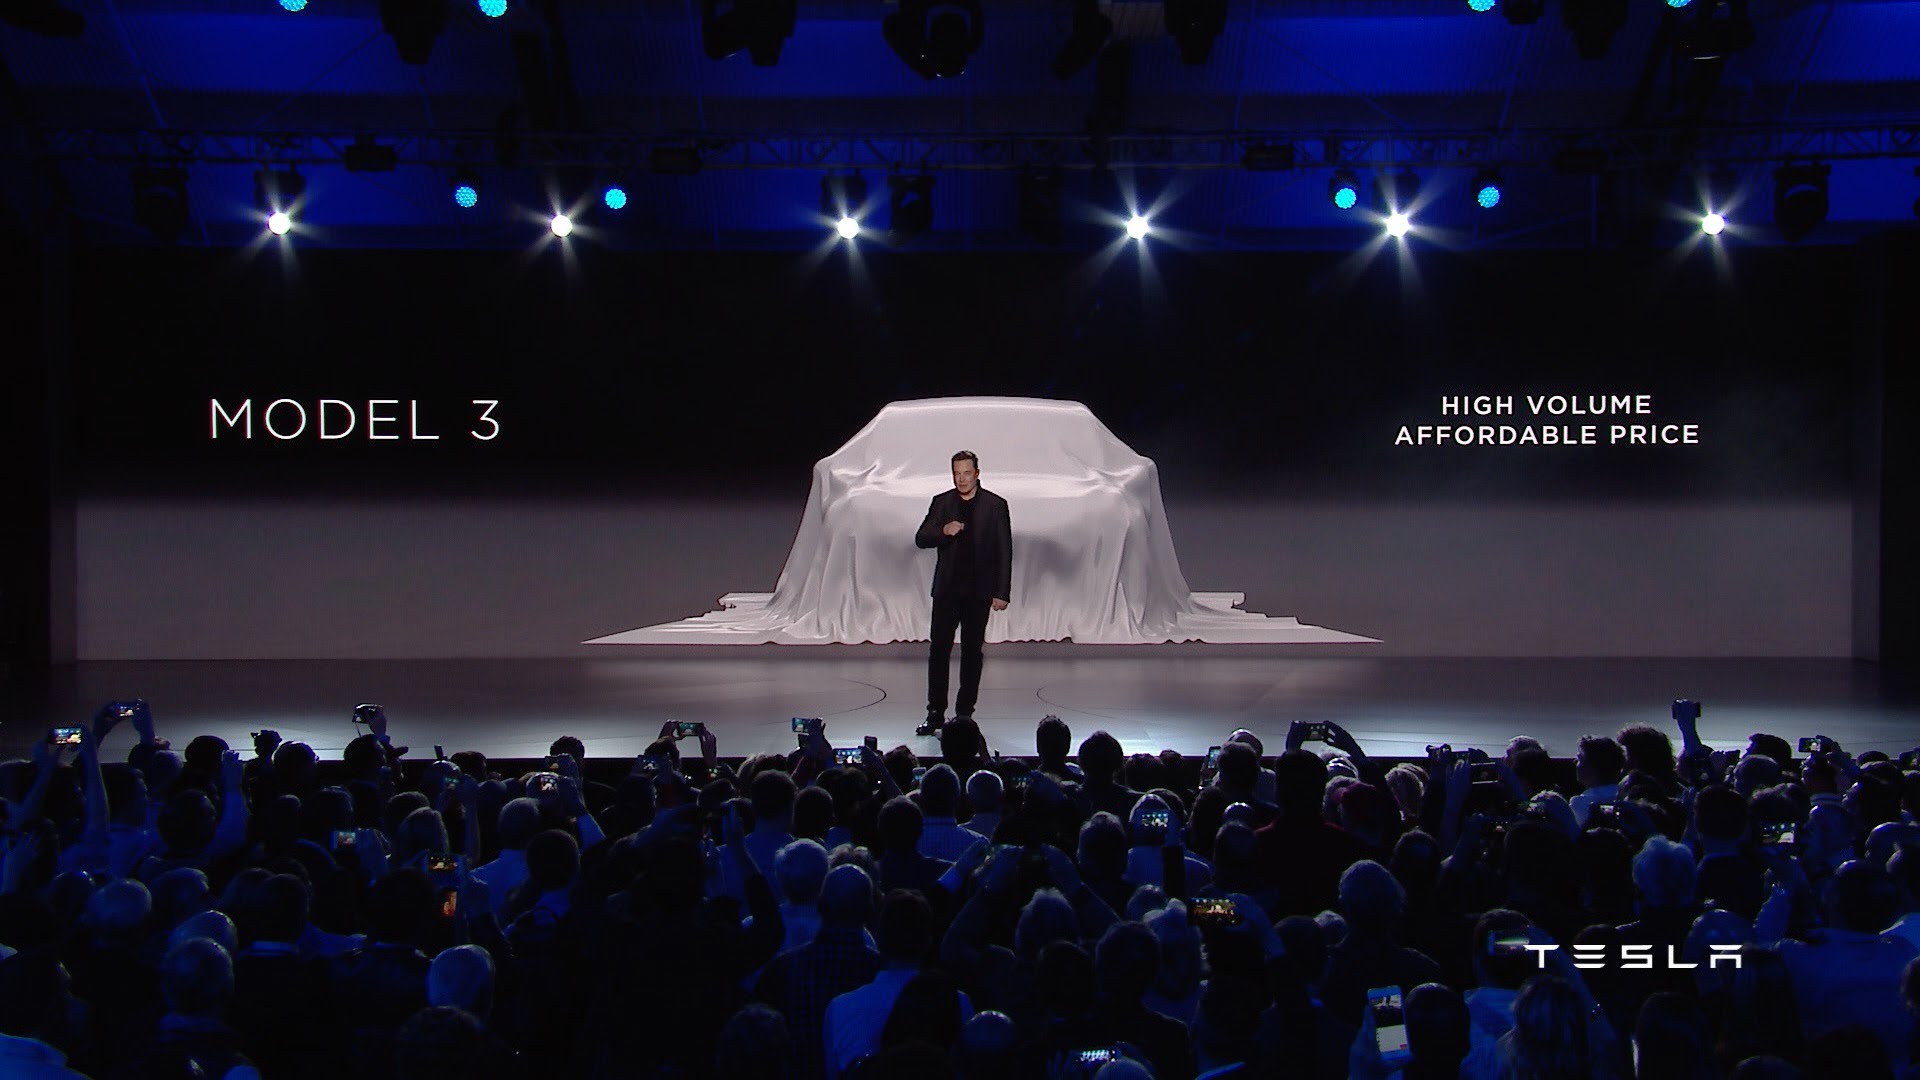 iPhoneStalking Elon Musk's Tesla Model 3 Launch AIChE